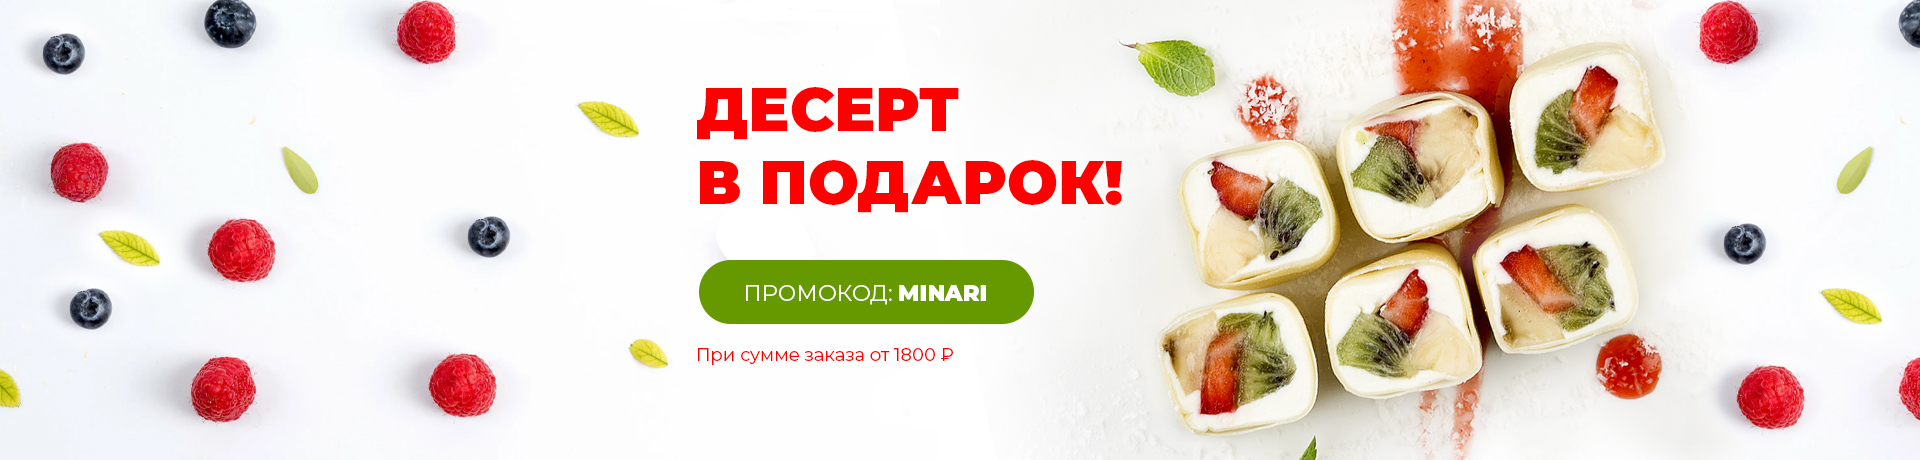 Минари в подарок  при заказе от 1400 рублей по промокоду LETO